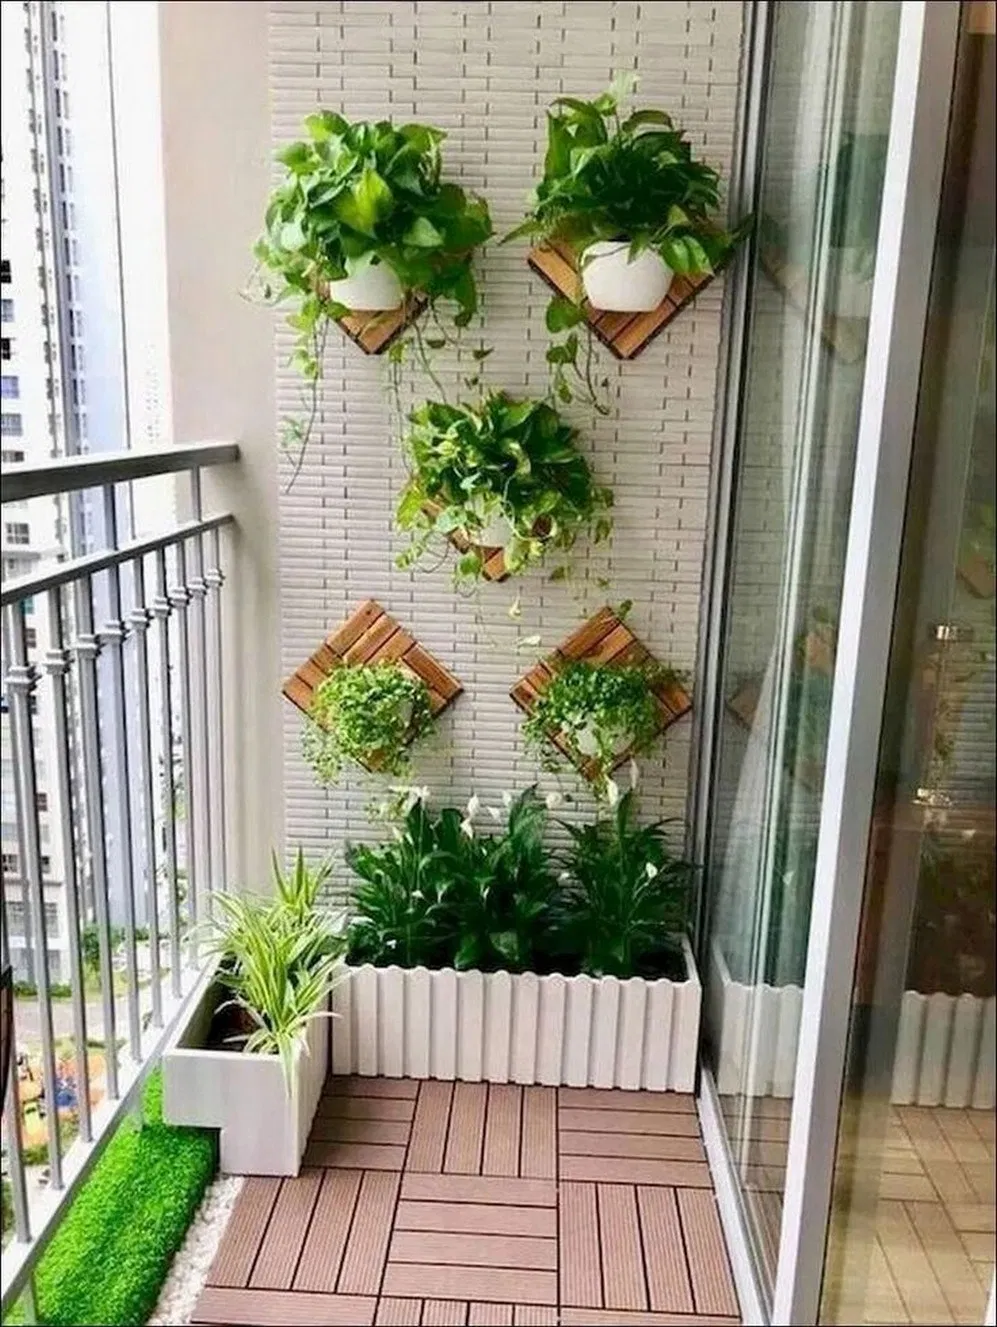 Какой штраф грозит за цветы на балконе?